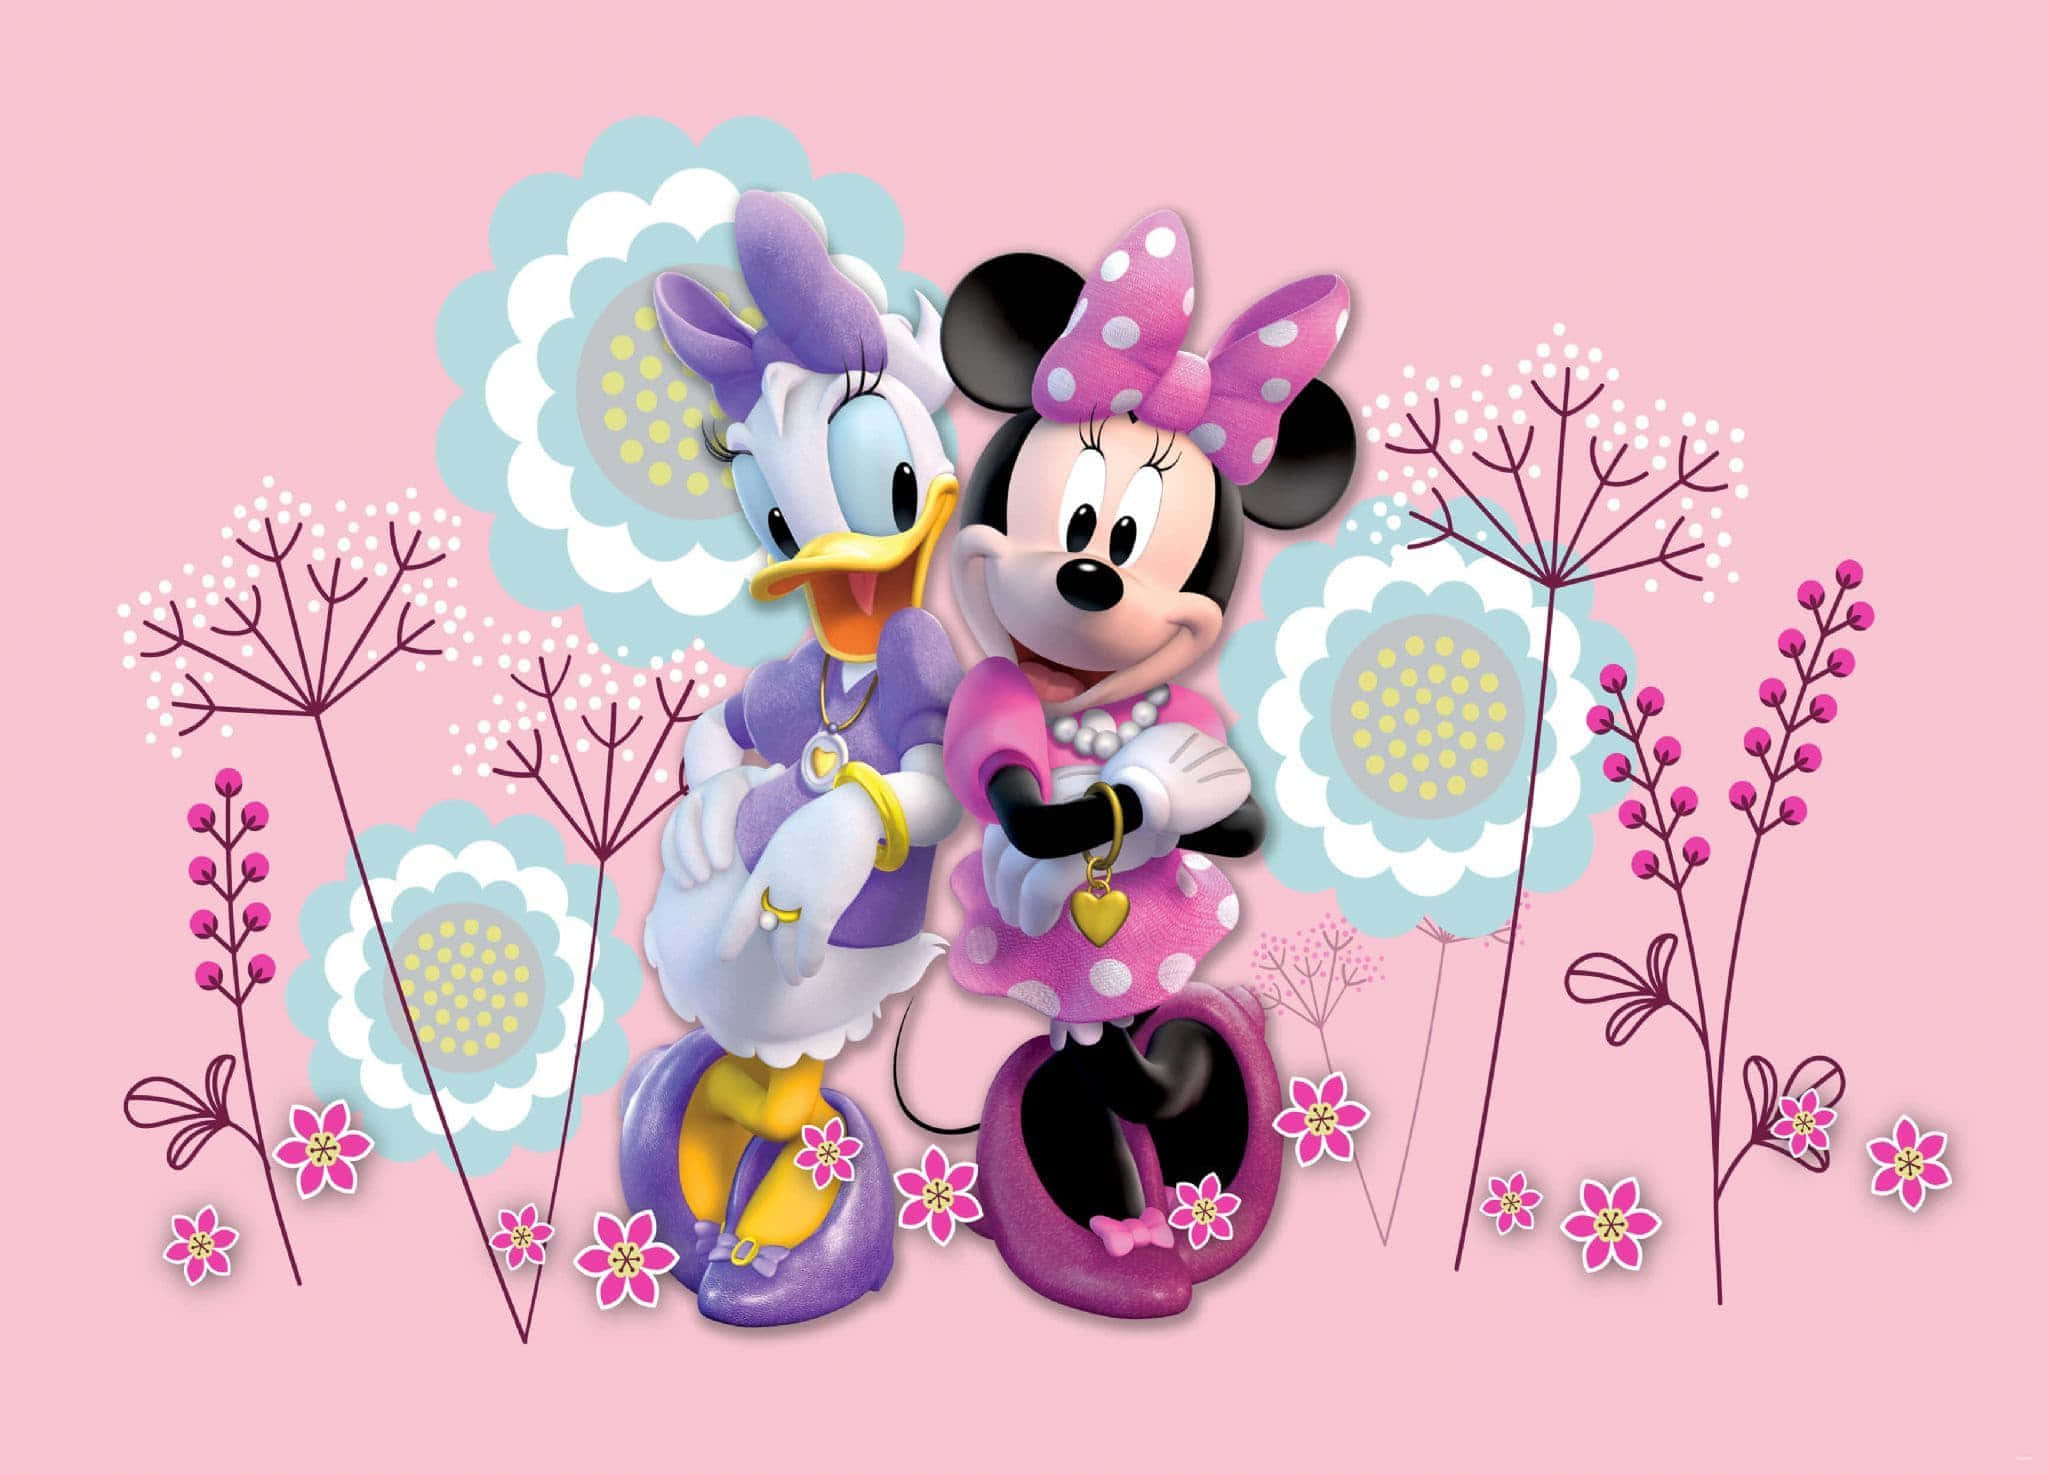 Klassiskedisney-prinsesse Minnie Mouse